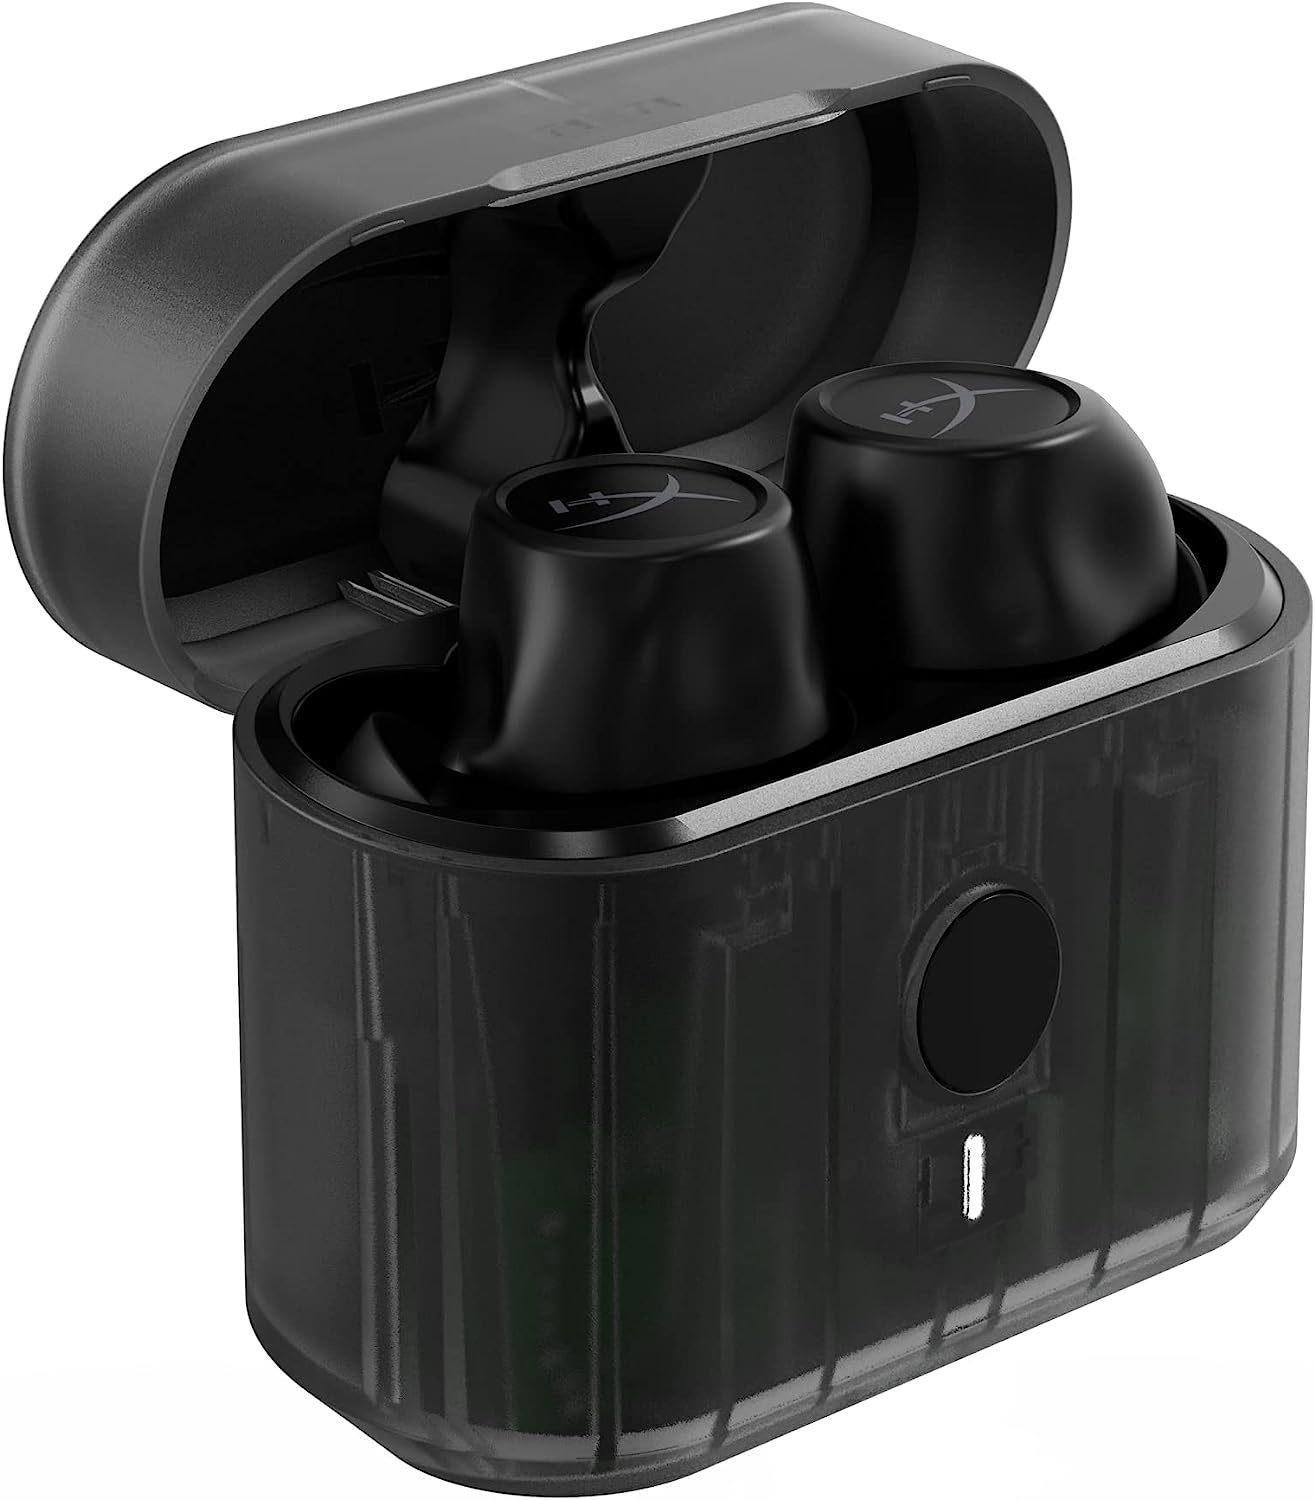 HyperX Cirro Buds Pro True Wireless Earbuds (Black)